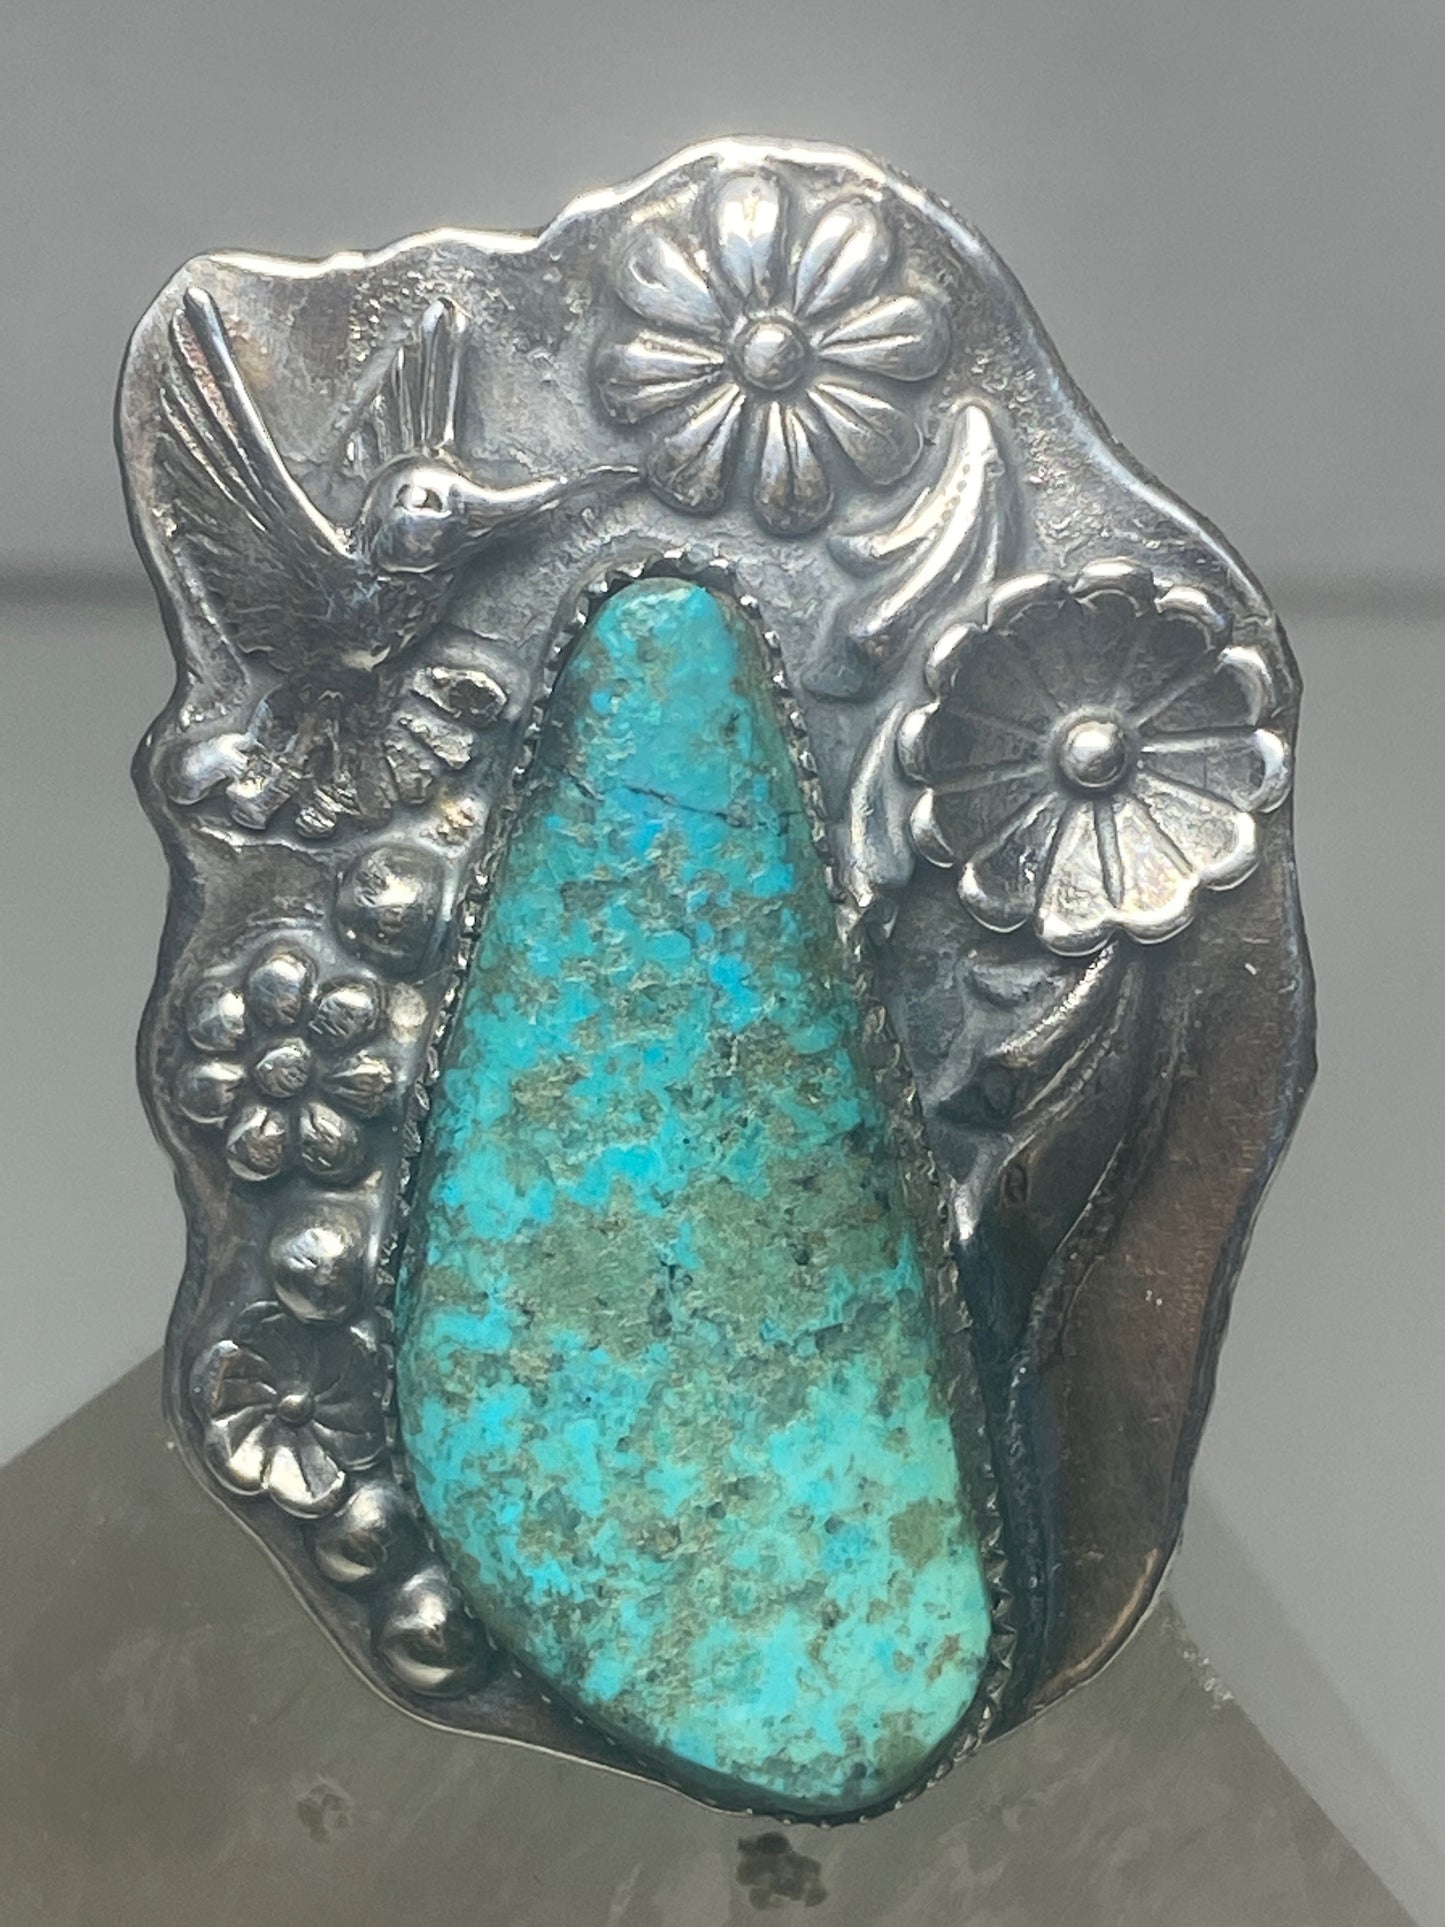 Eagle ? ring turquoise bird hummingbird? squash blossom flower southwest sterling silver